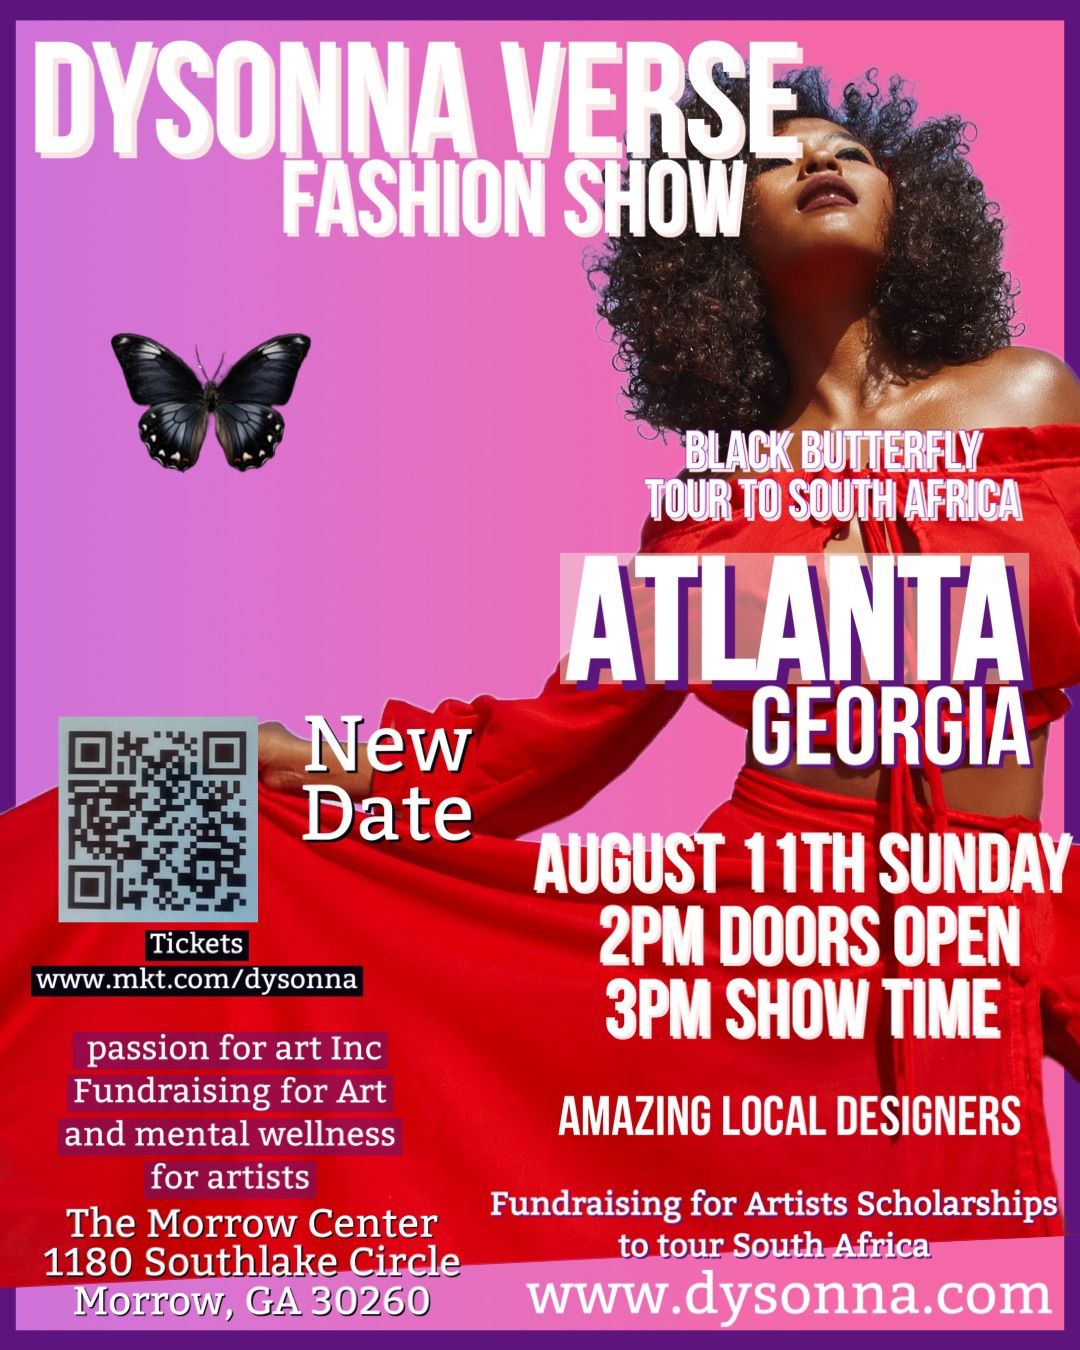 DysonnaVerse Fashion Show Atlanta \u201cBlack Butterfly\u201d